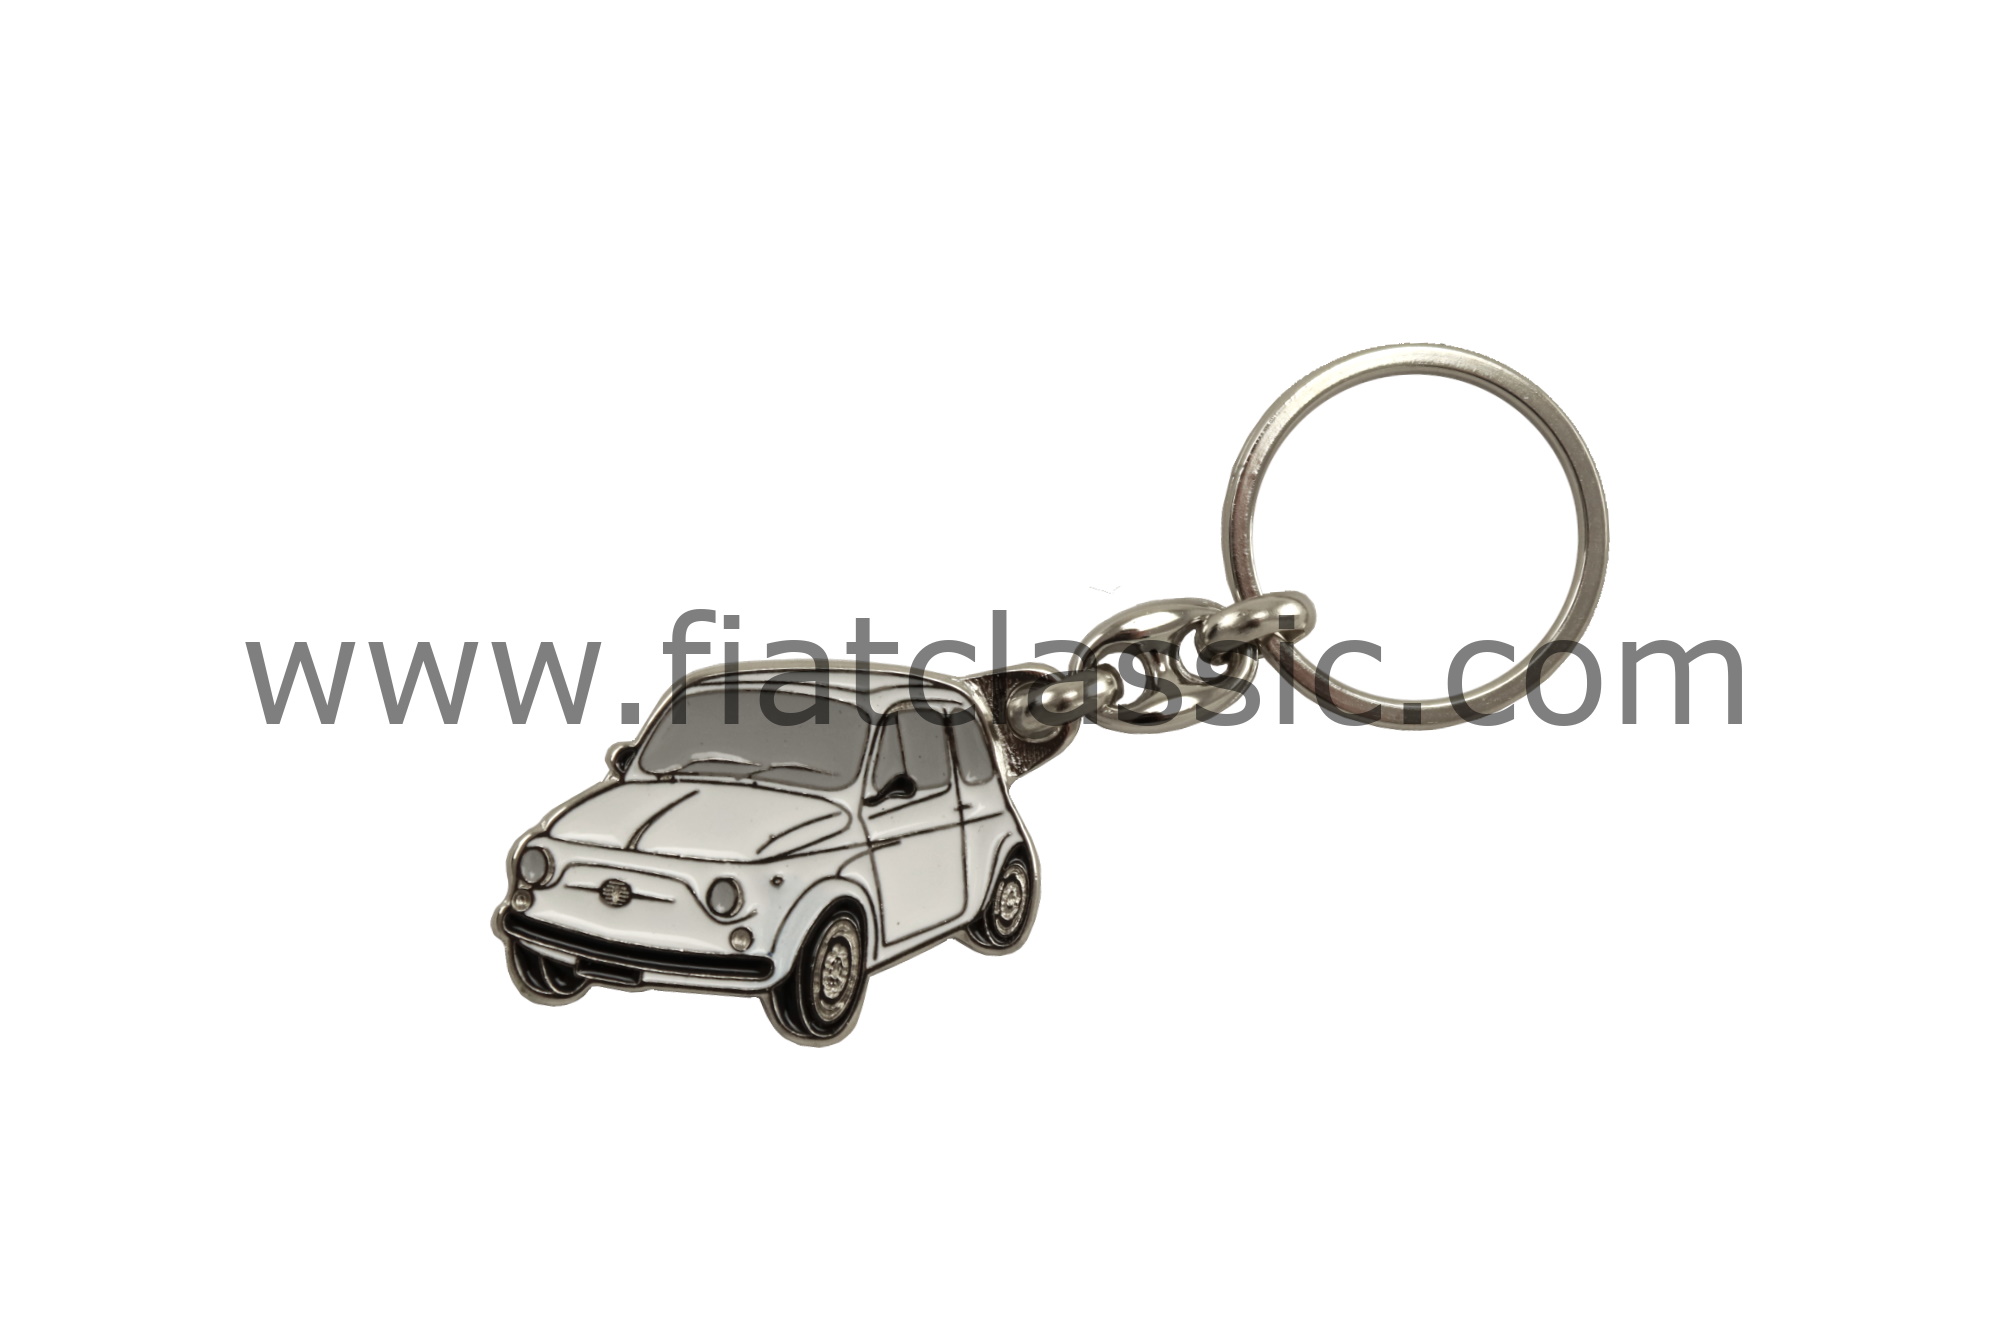 Schlüsselanhänger Fiat 500 silber, 1:87 - Ersatzteile Fiat 500